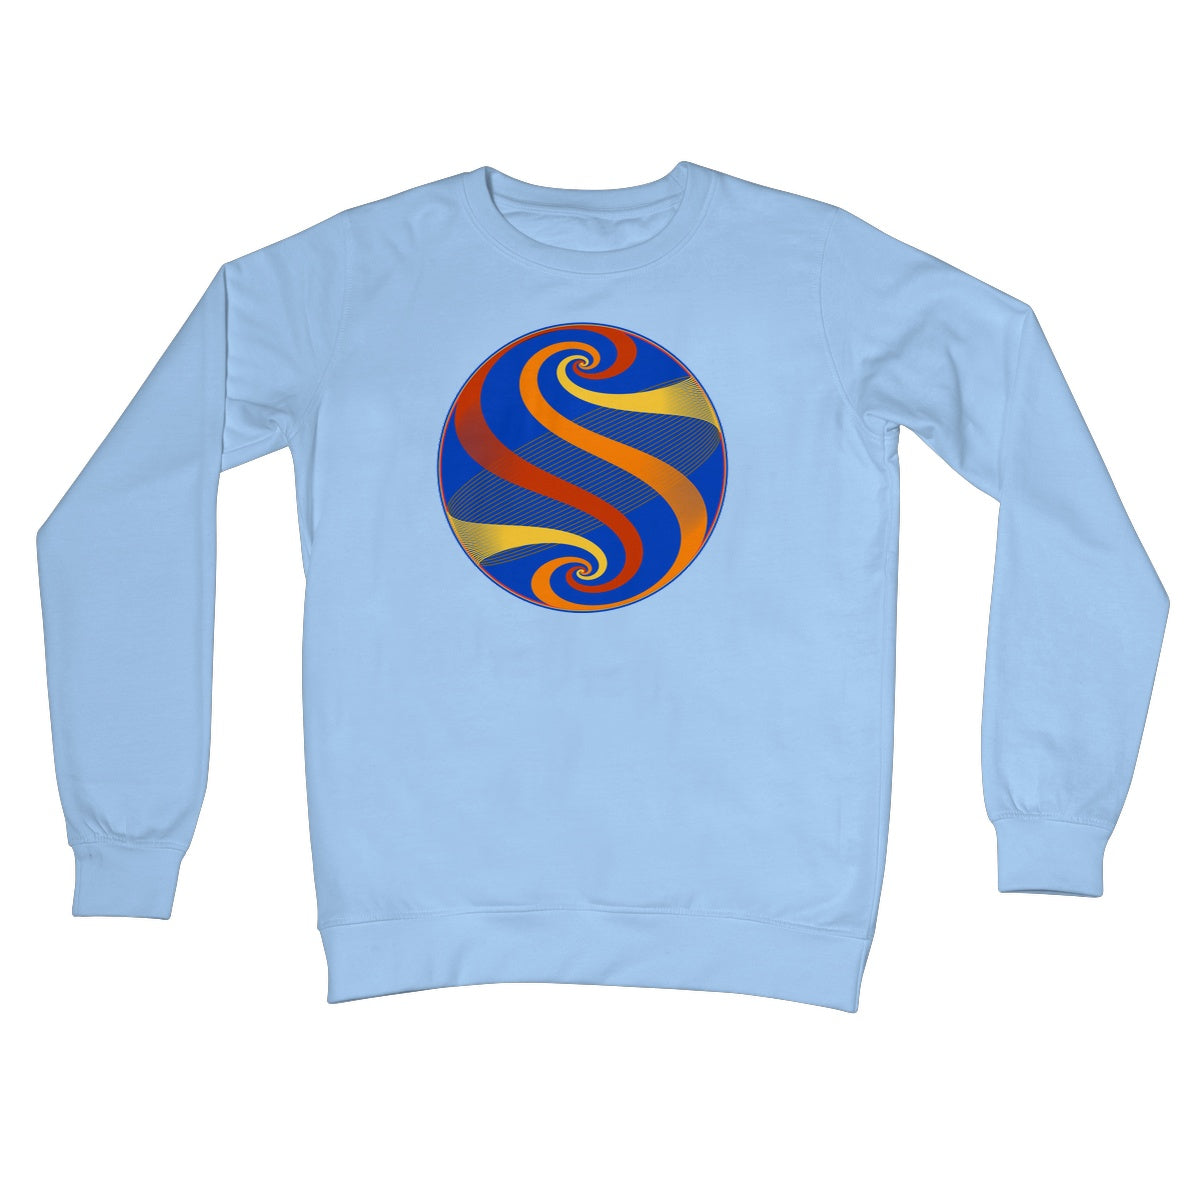 Möbius Flow, Autumn Globe Crew Neck Sweatshirt